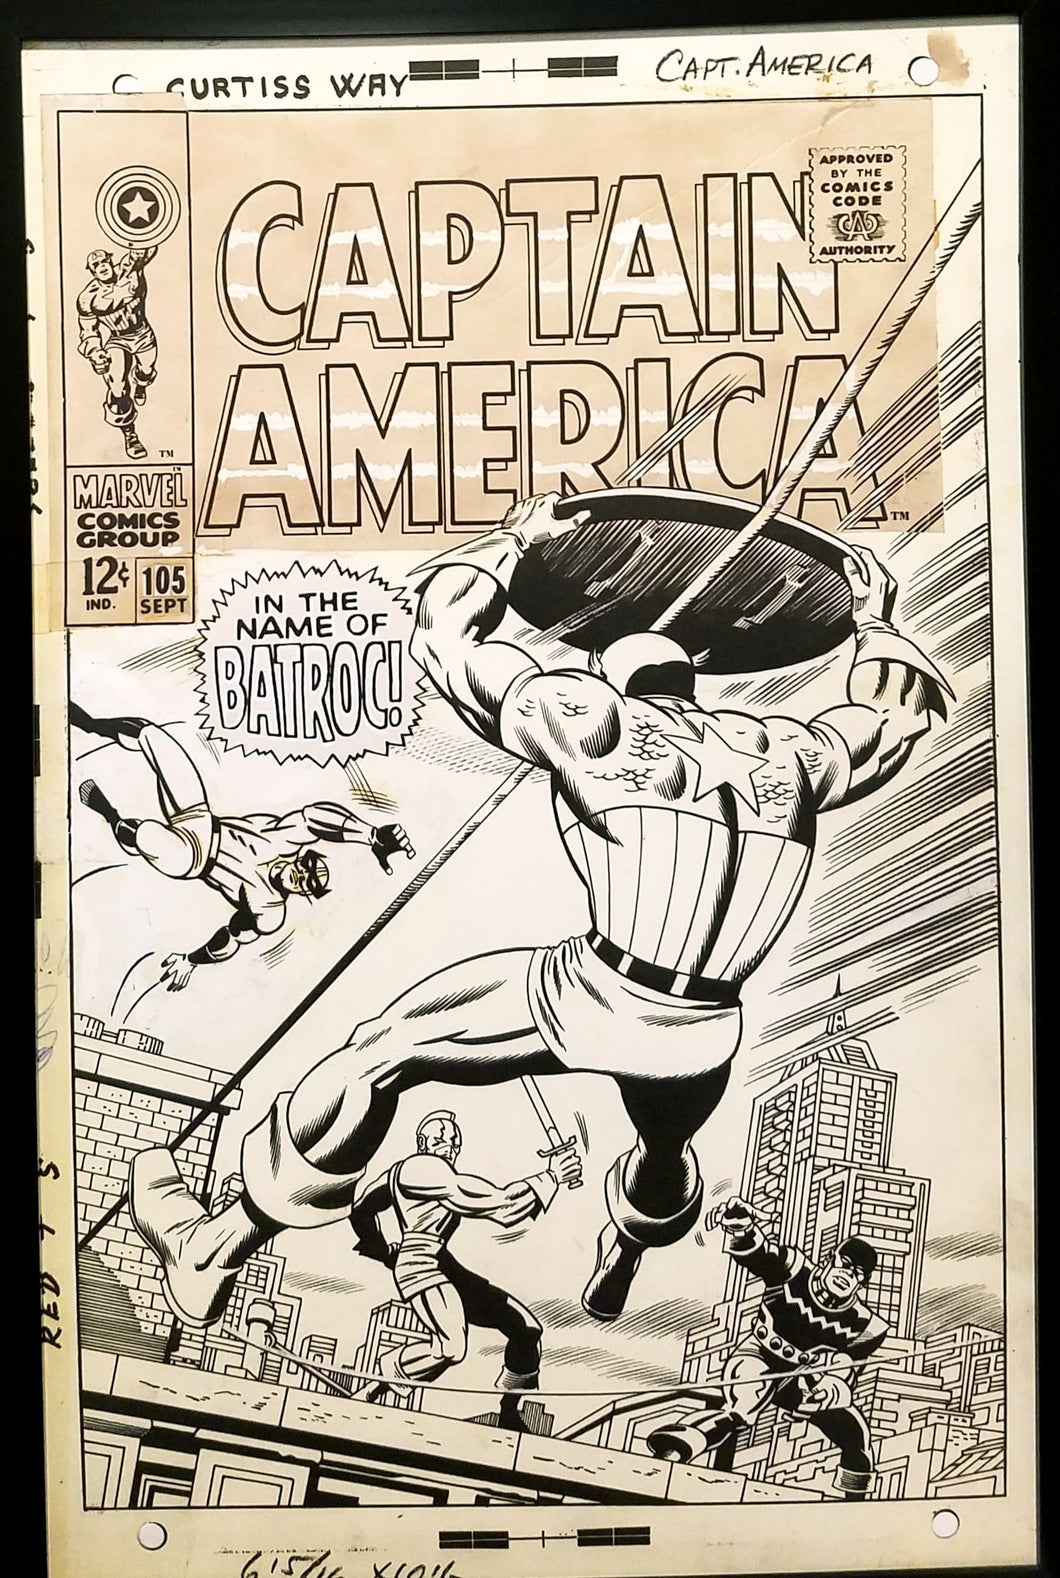 Captain America #105 by Jack Kirby 11x17 FRAMED Original Art Poster Marvel Comics